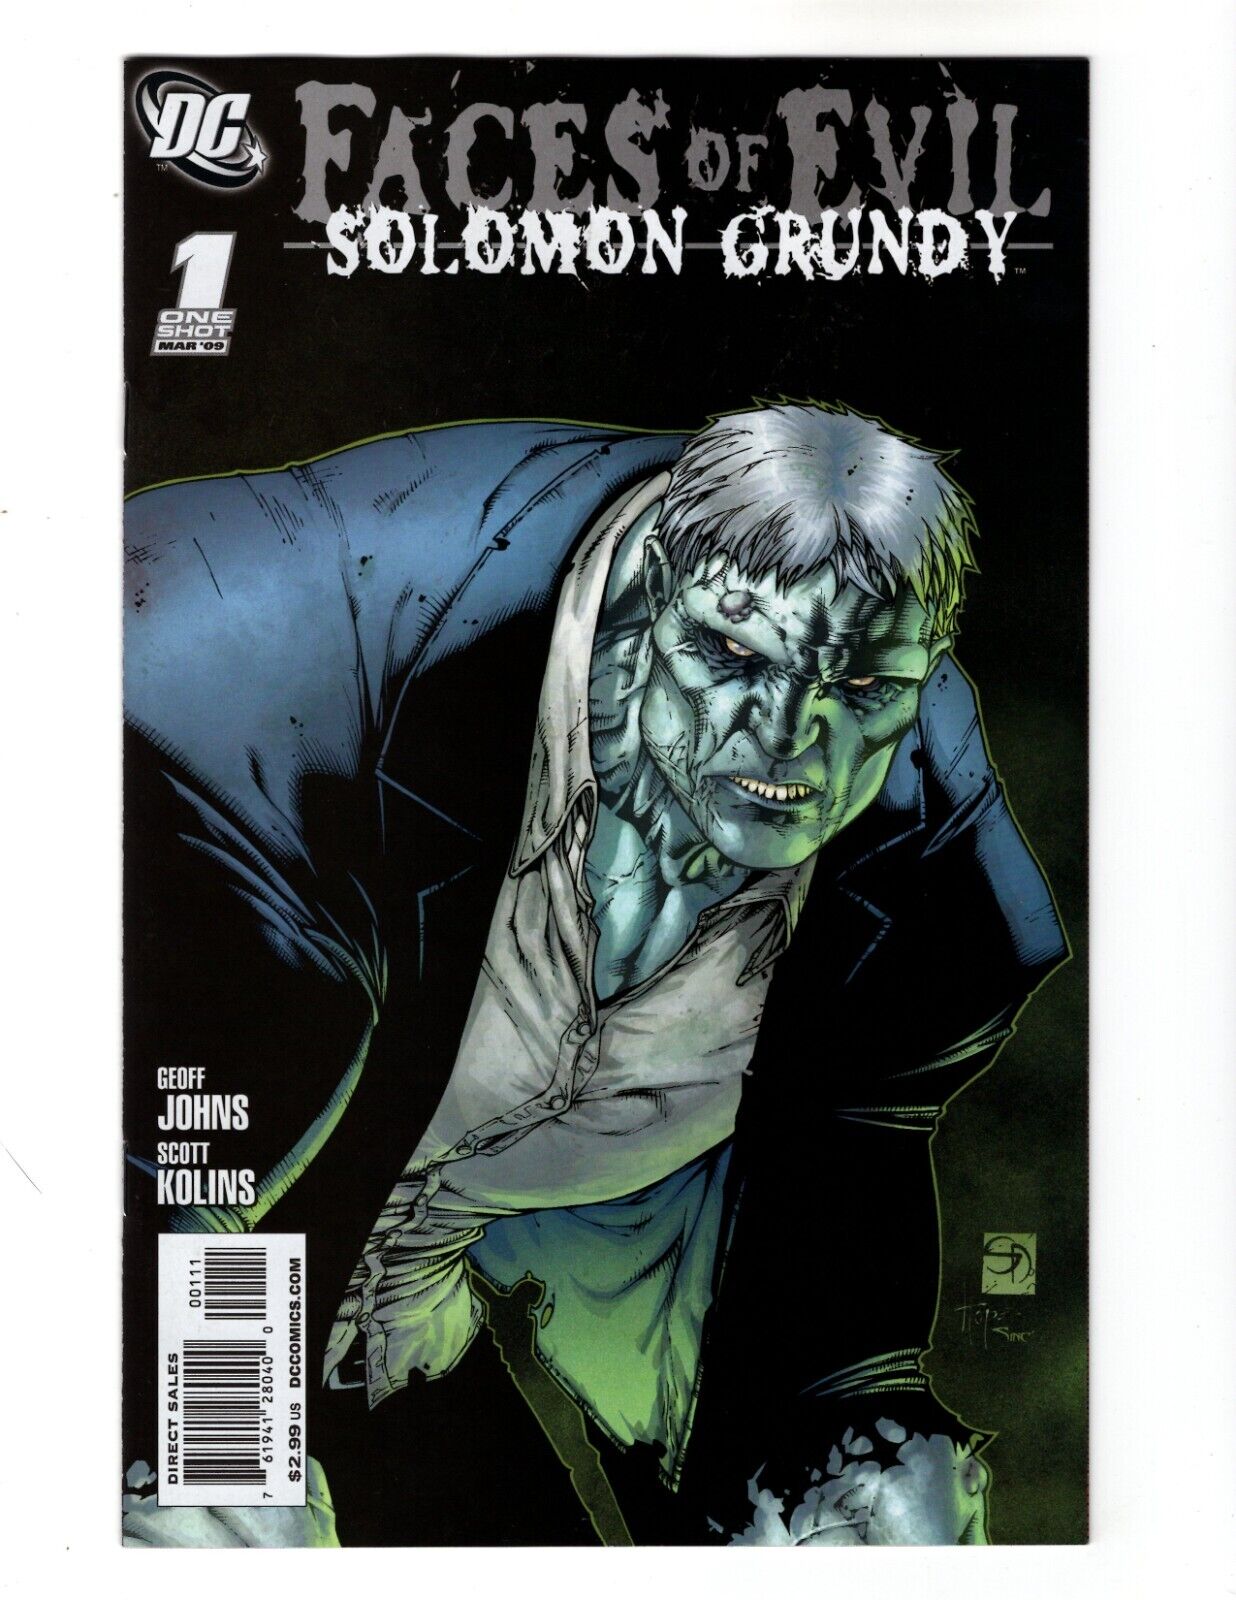 FACES OF EVIL - SOLOMON GRUNDY #1 (FN) [2009 DC COMICS]